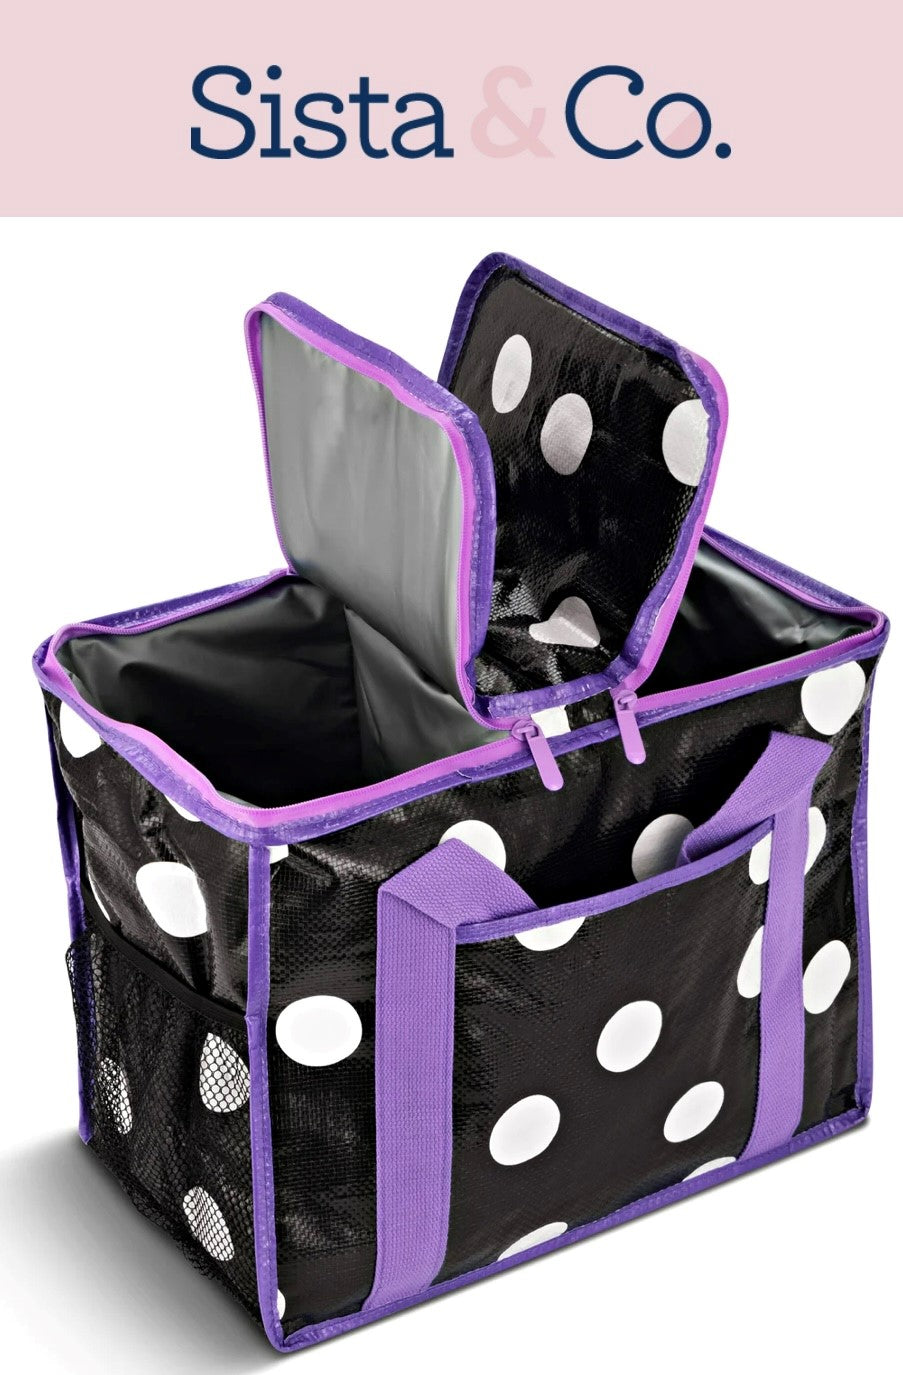 Sista&Co. The Original Family Cooler Bag - Black/Purple